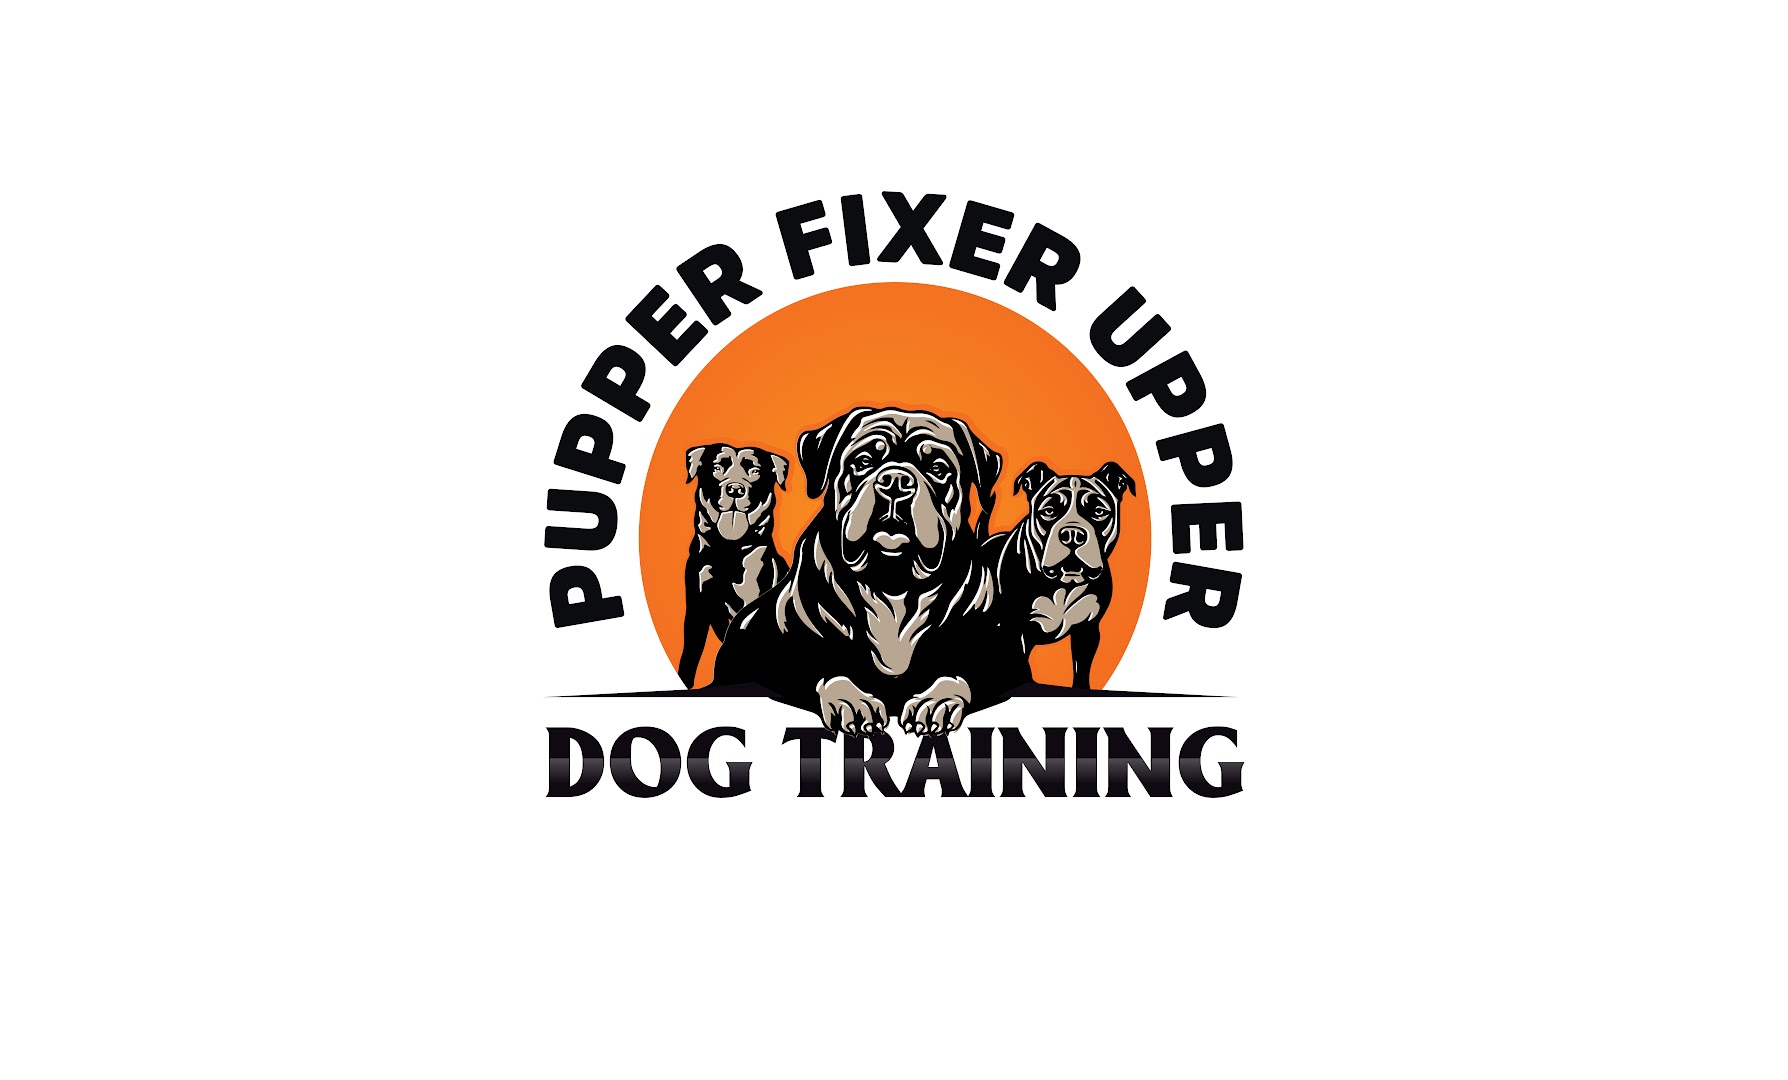 Pupper Fixer Upper Dog Training